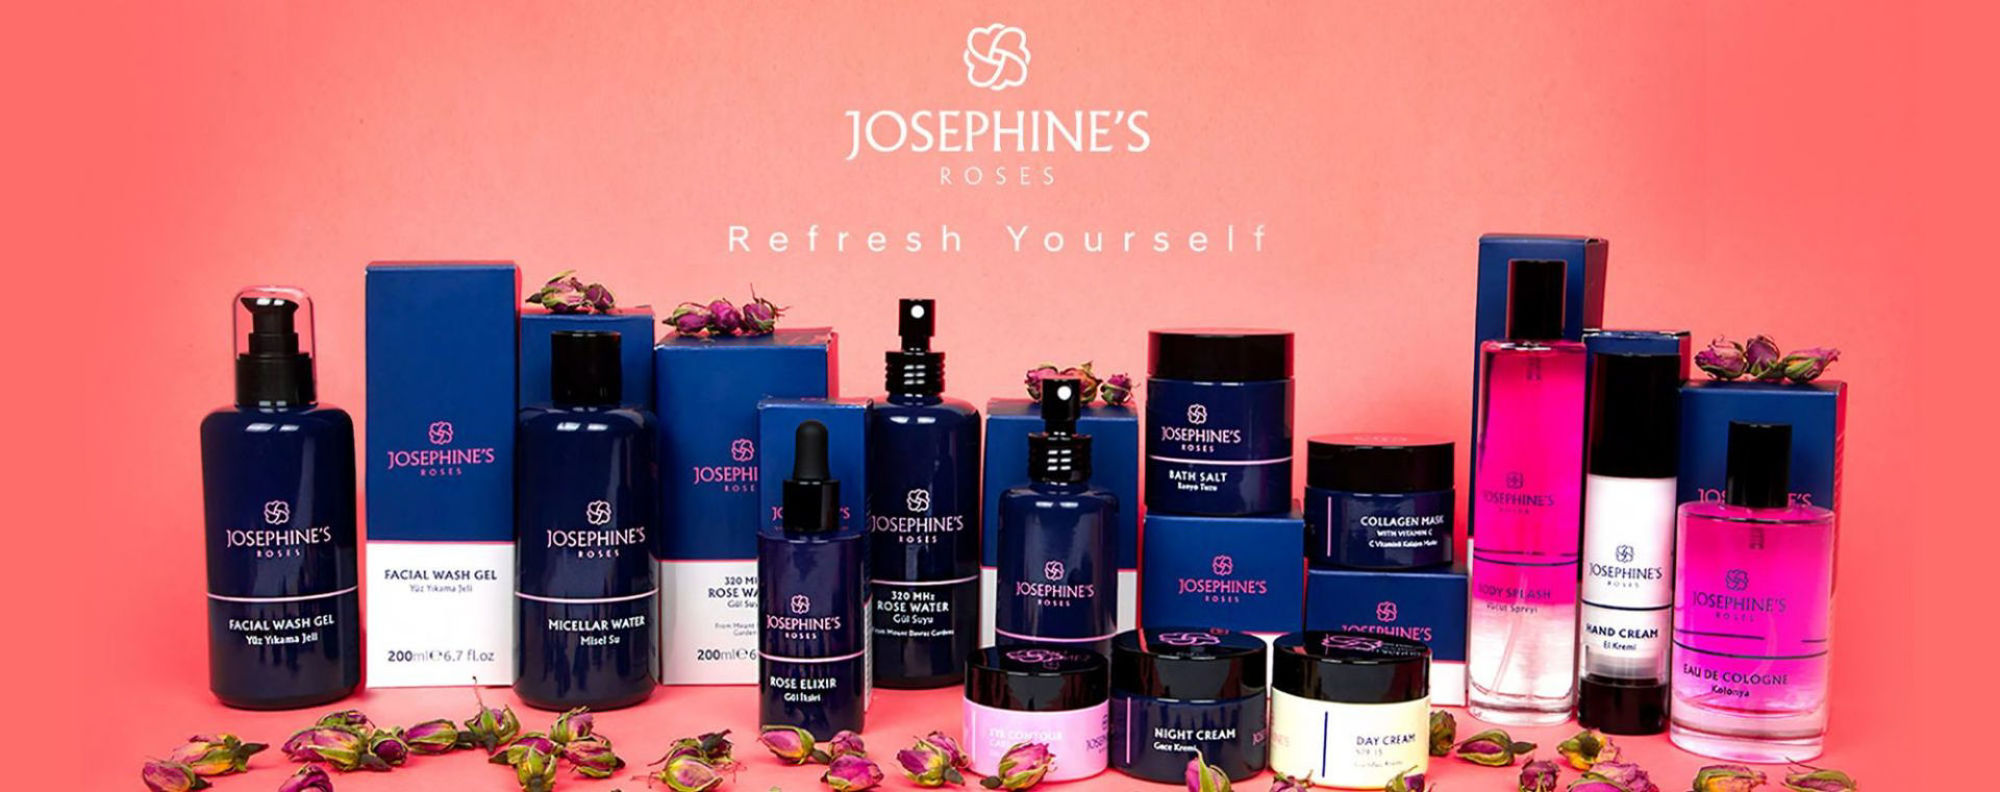 Josephine's Roses  - Refresh YourSelf